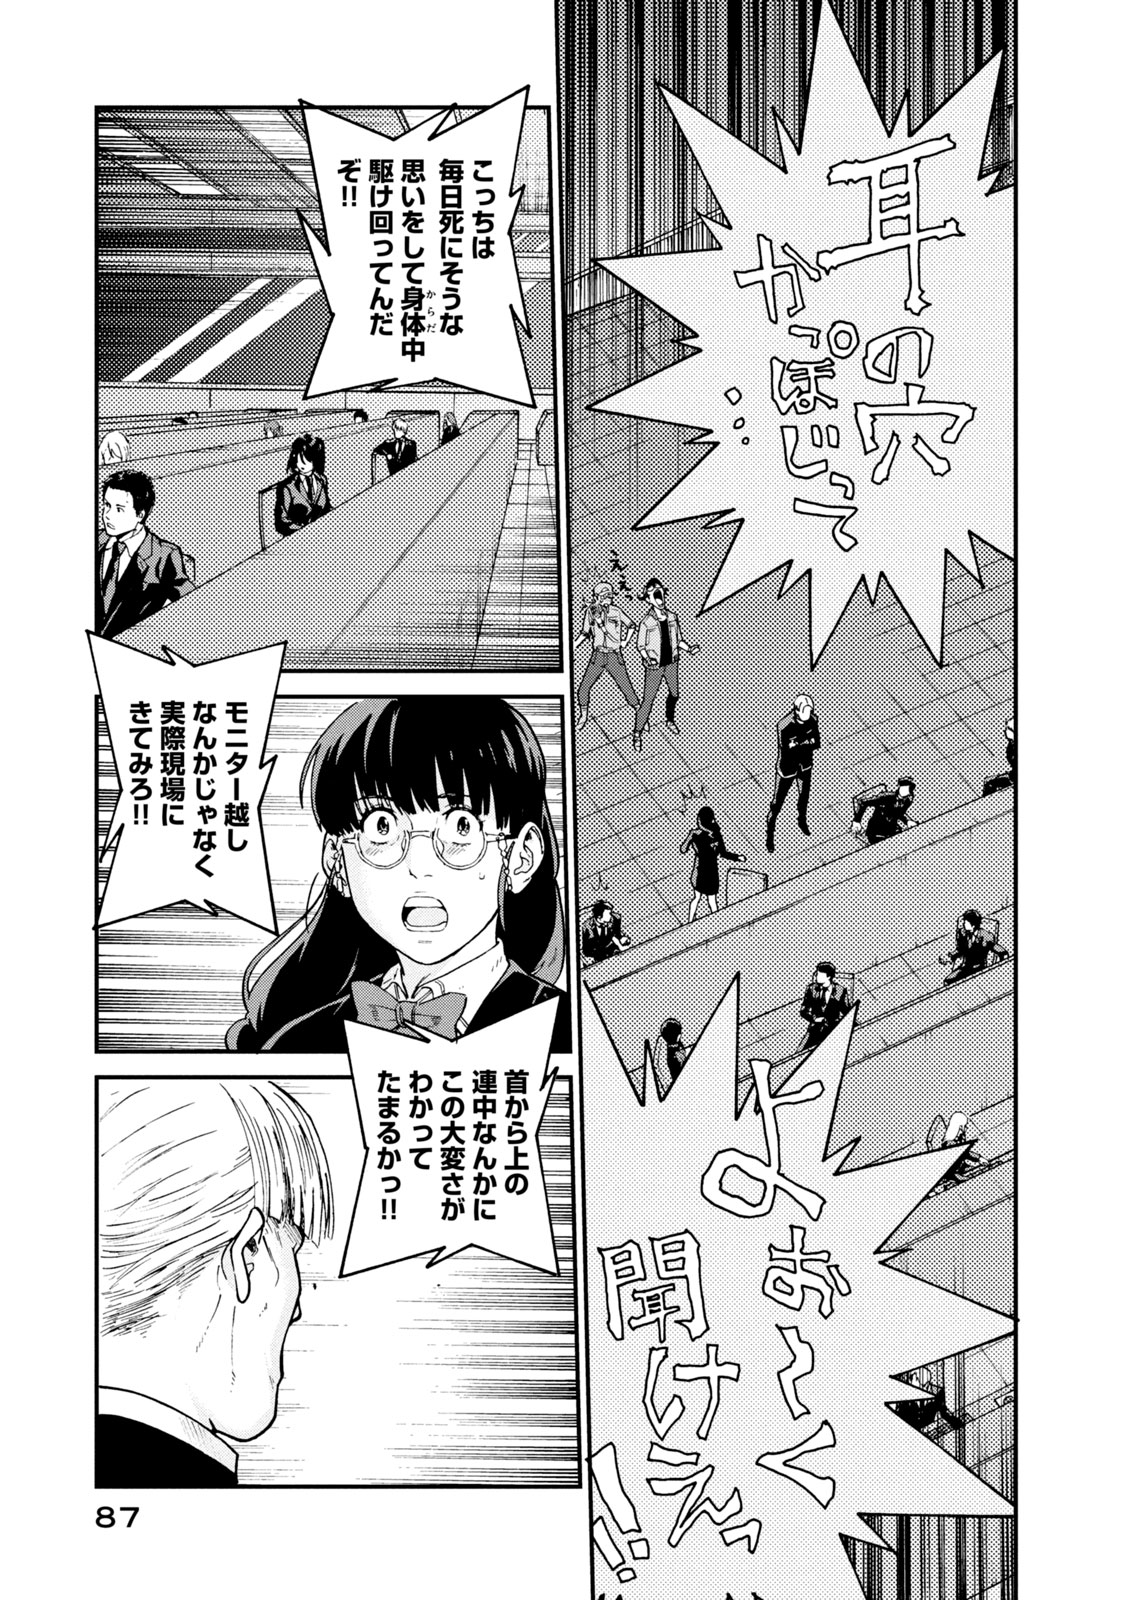 Hataraku Saibou BLACK - Chapter 34 - Page 25